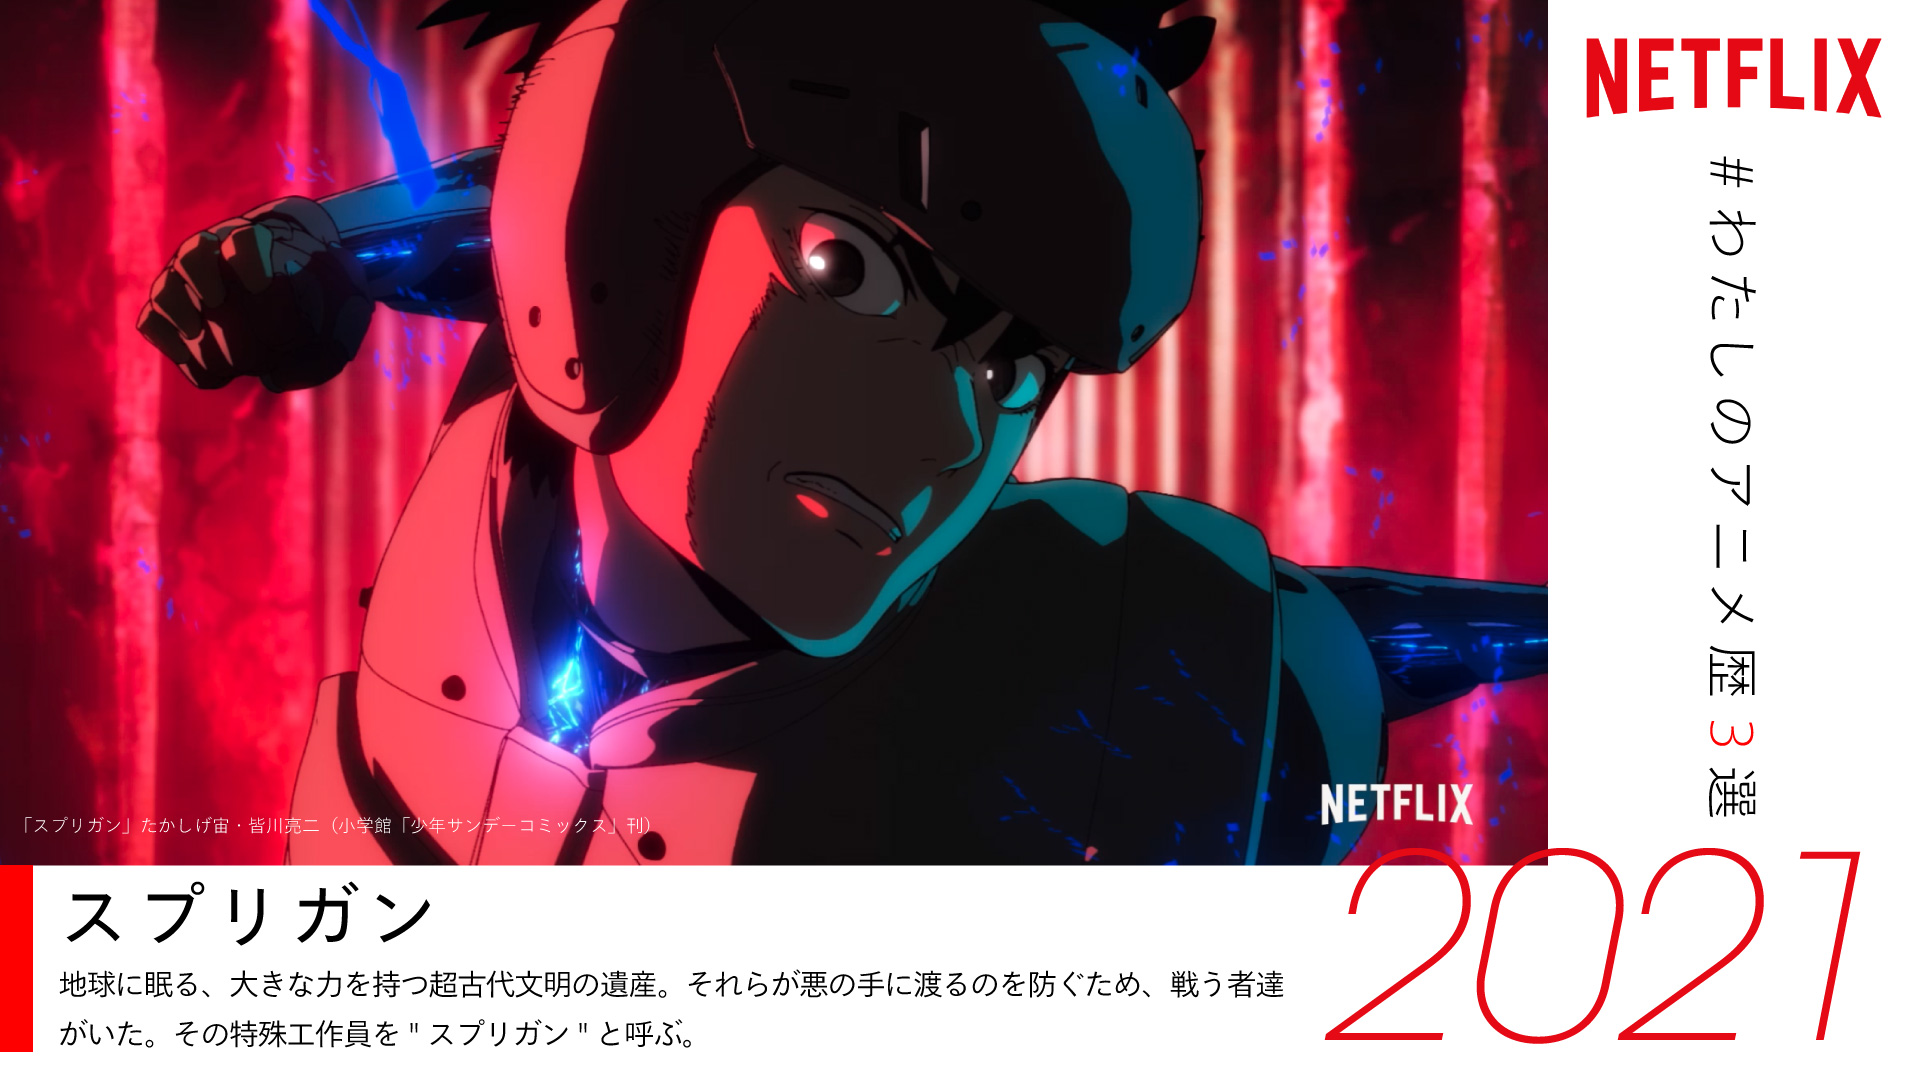 Netflix Japan Anime ツイートありがとうございます 素敵なアニメ歴をお持ちのあなたに 是非オススメしたいのは ネトフリ で新たに配信予定の スプリガン 新作 名作アニメが今後も続々登場 お楽しみに T Co Vbatklfskc